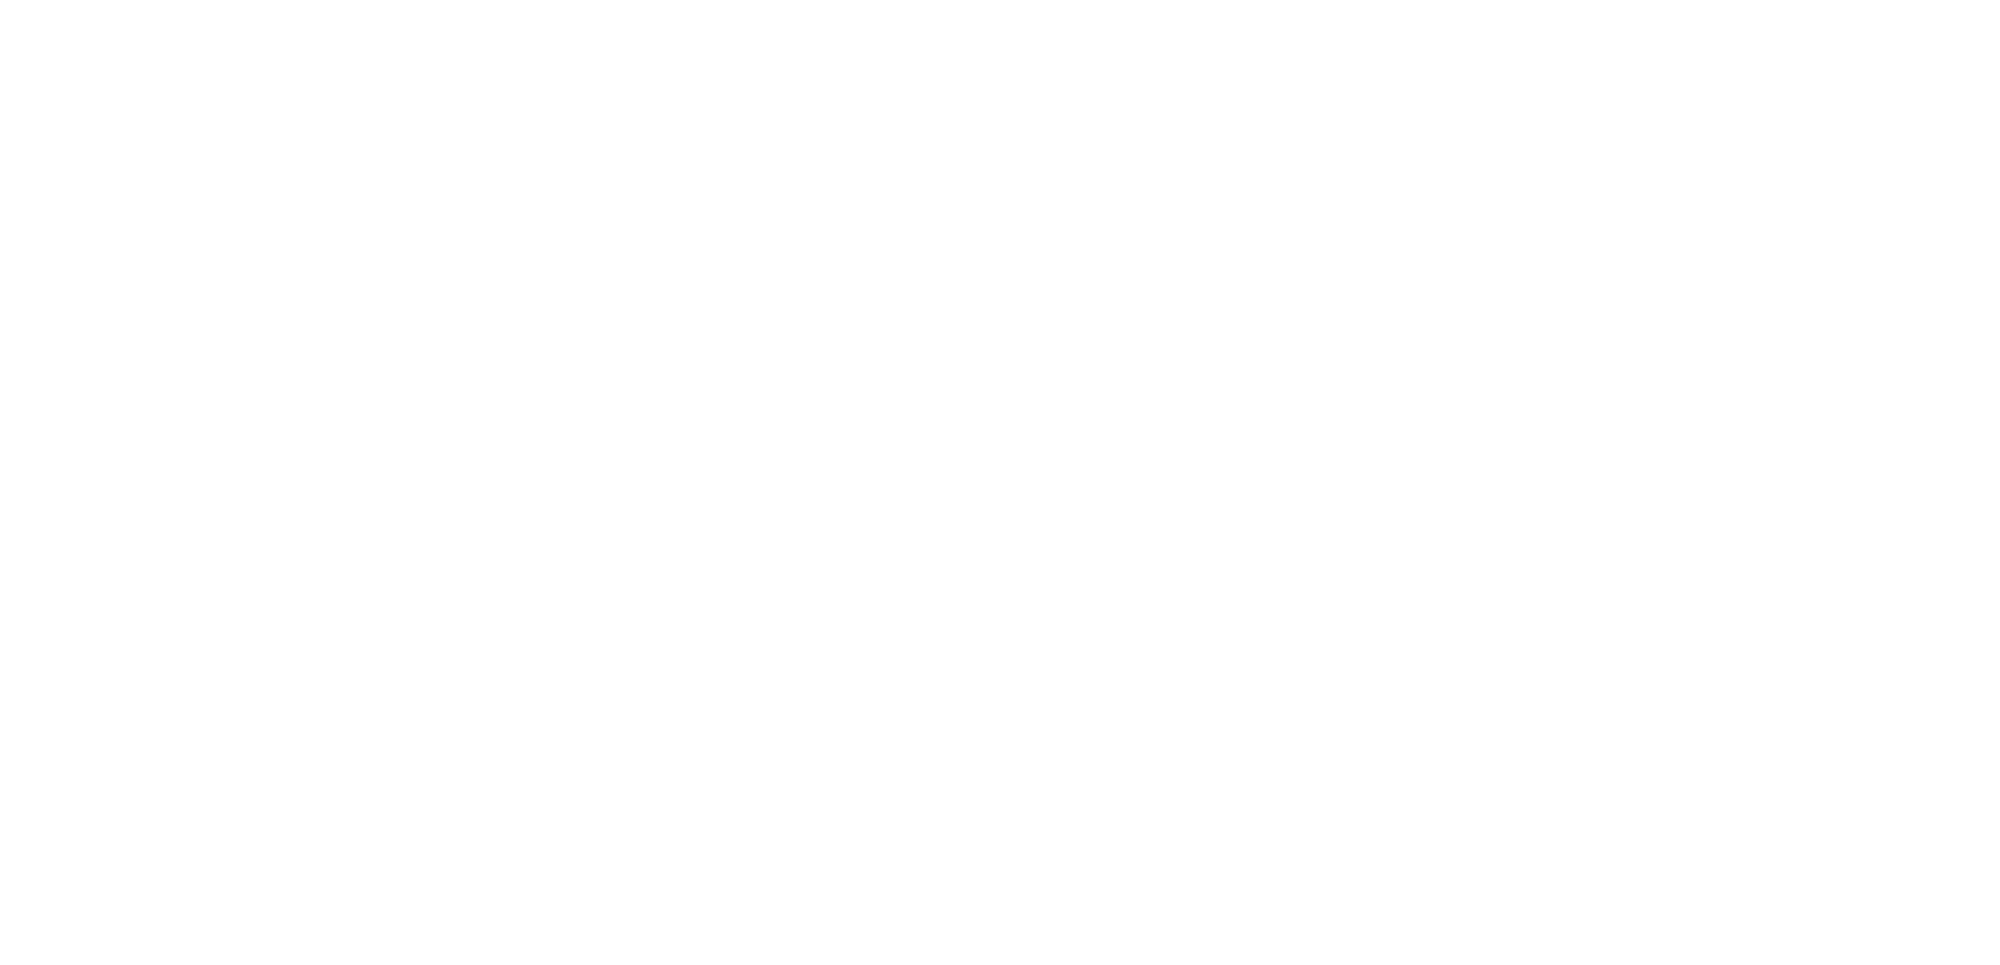 The Language Motivator